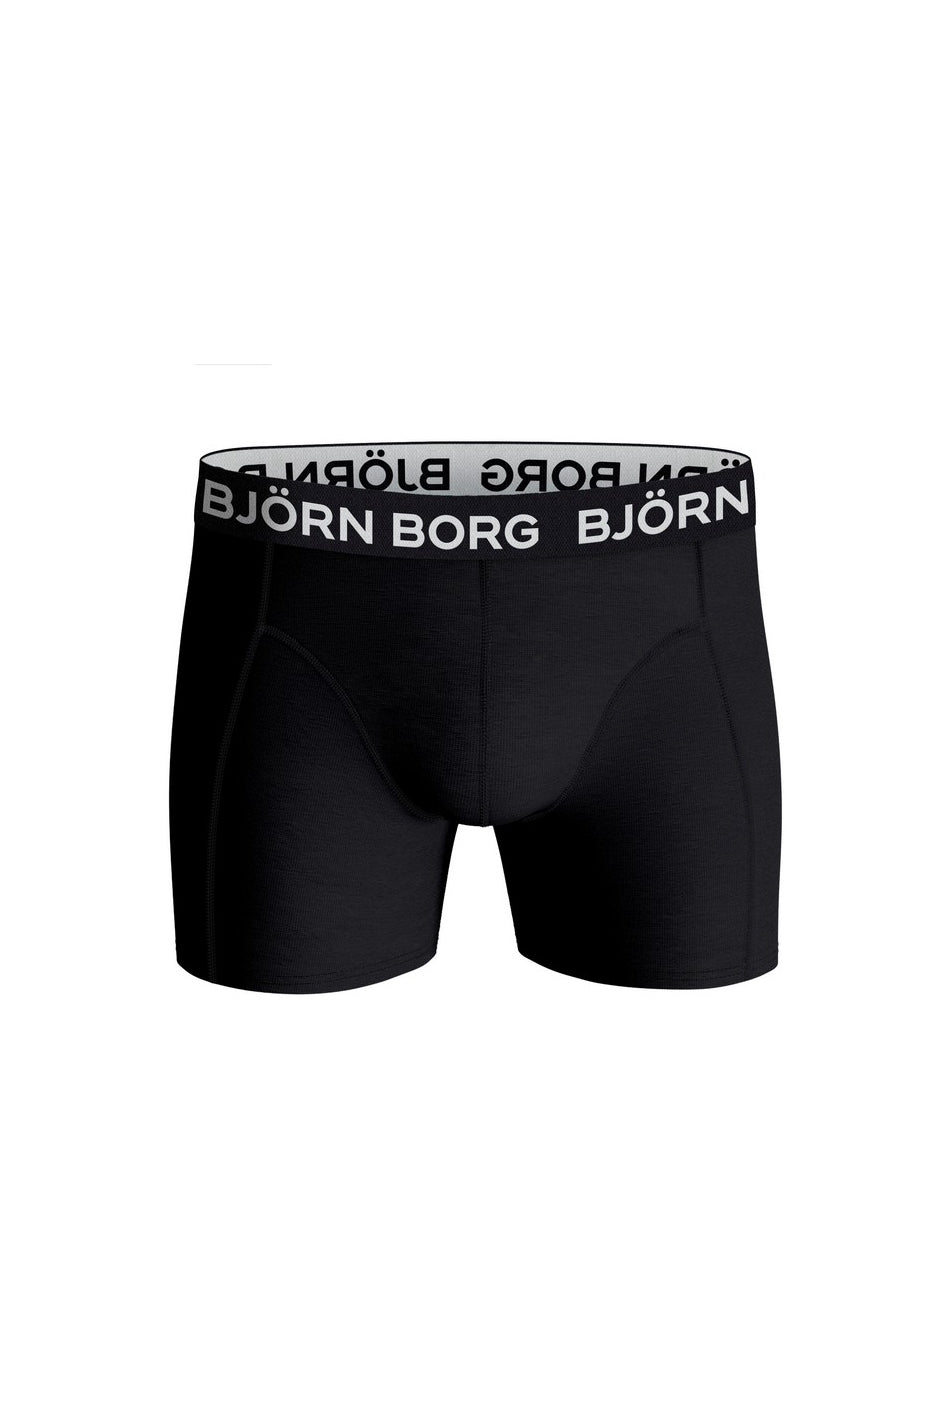 Björn Borg 12 Pack Men's Essential Boxer Brief